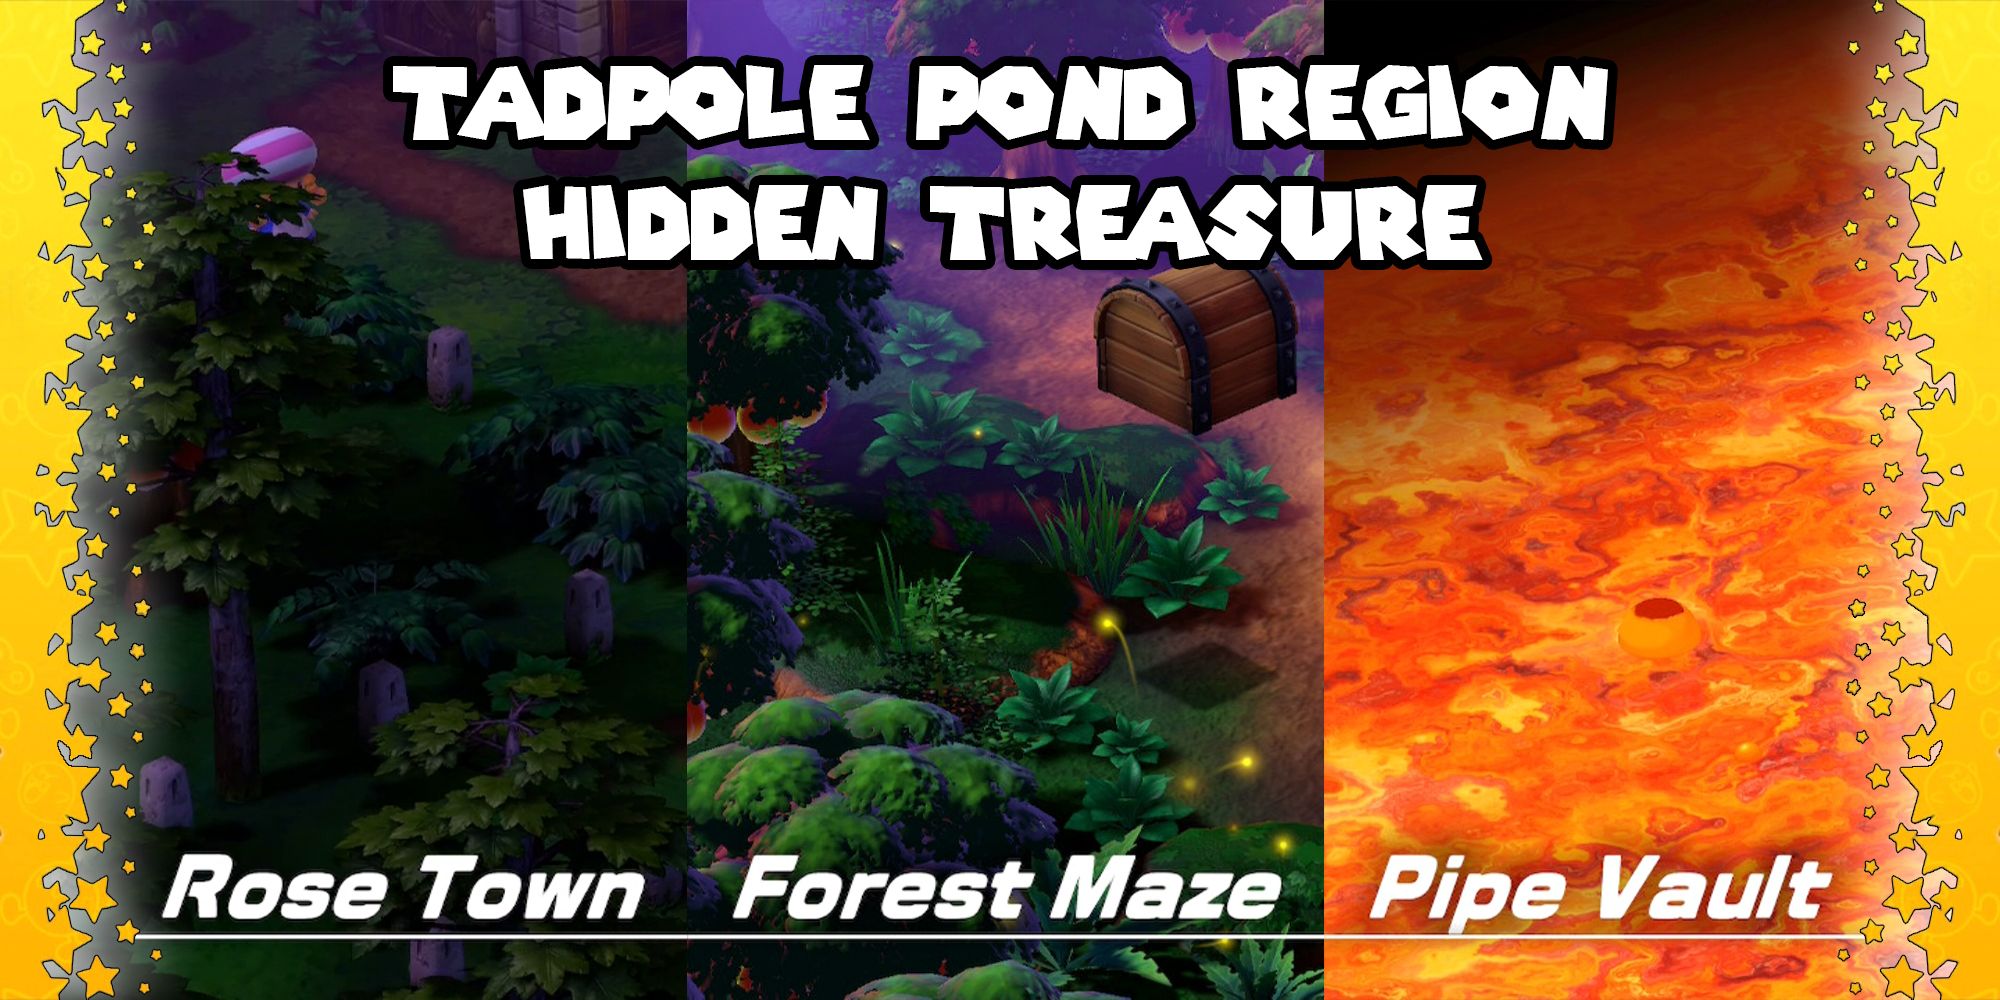 Super Mario RPG Hidden Treasure in Tadpole Pond Region